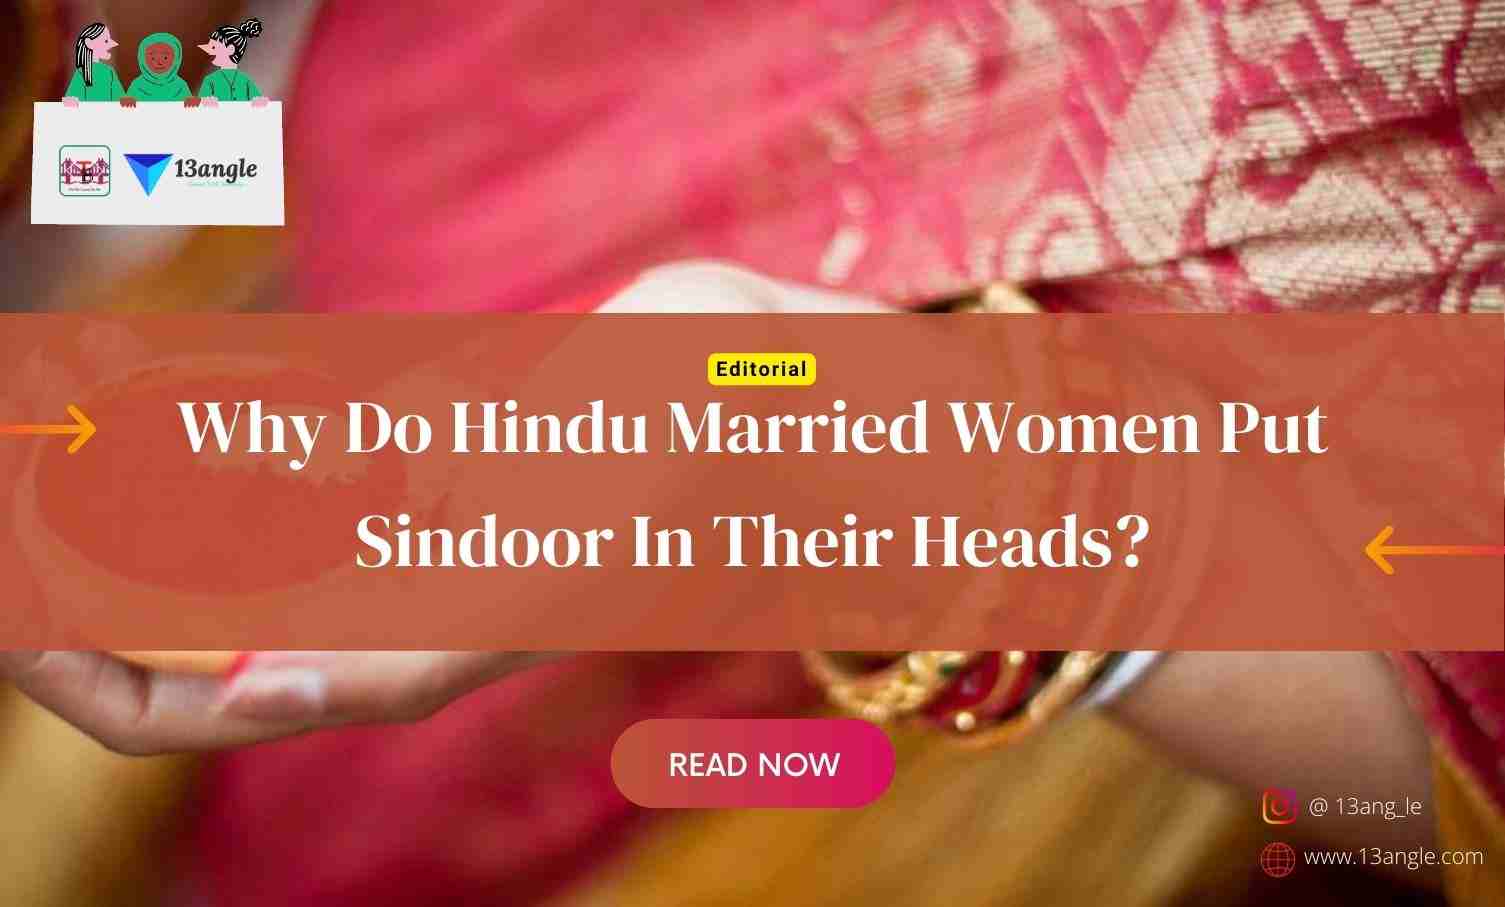 Why Do Hindu Married Women Put Sindoor In Their Heads- The Bridge (13angle)